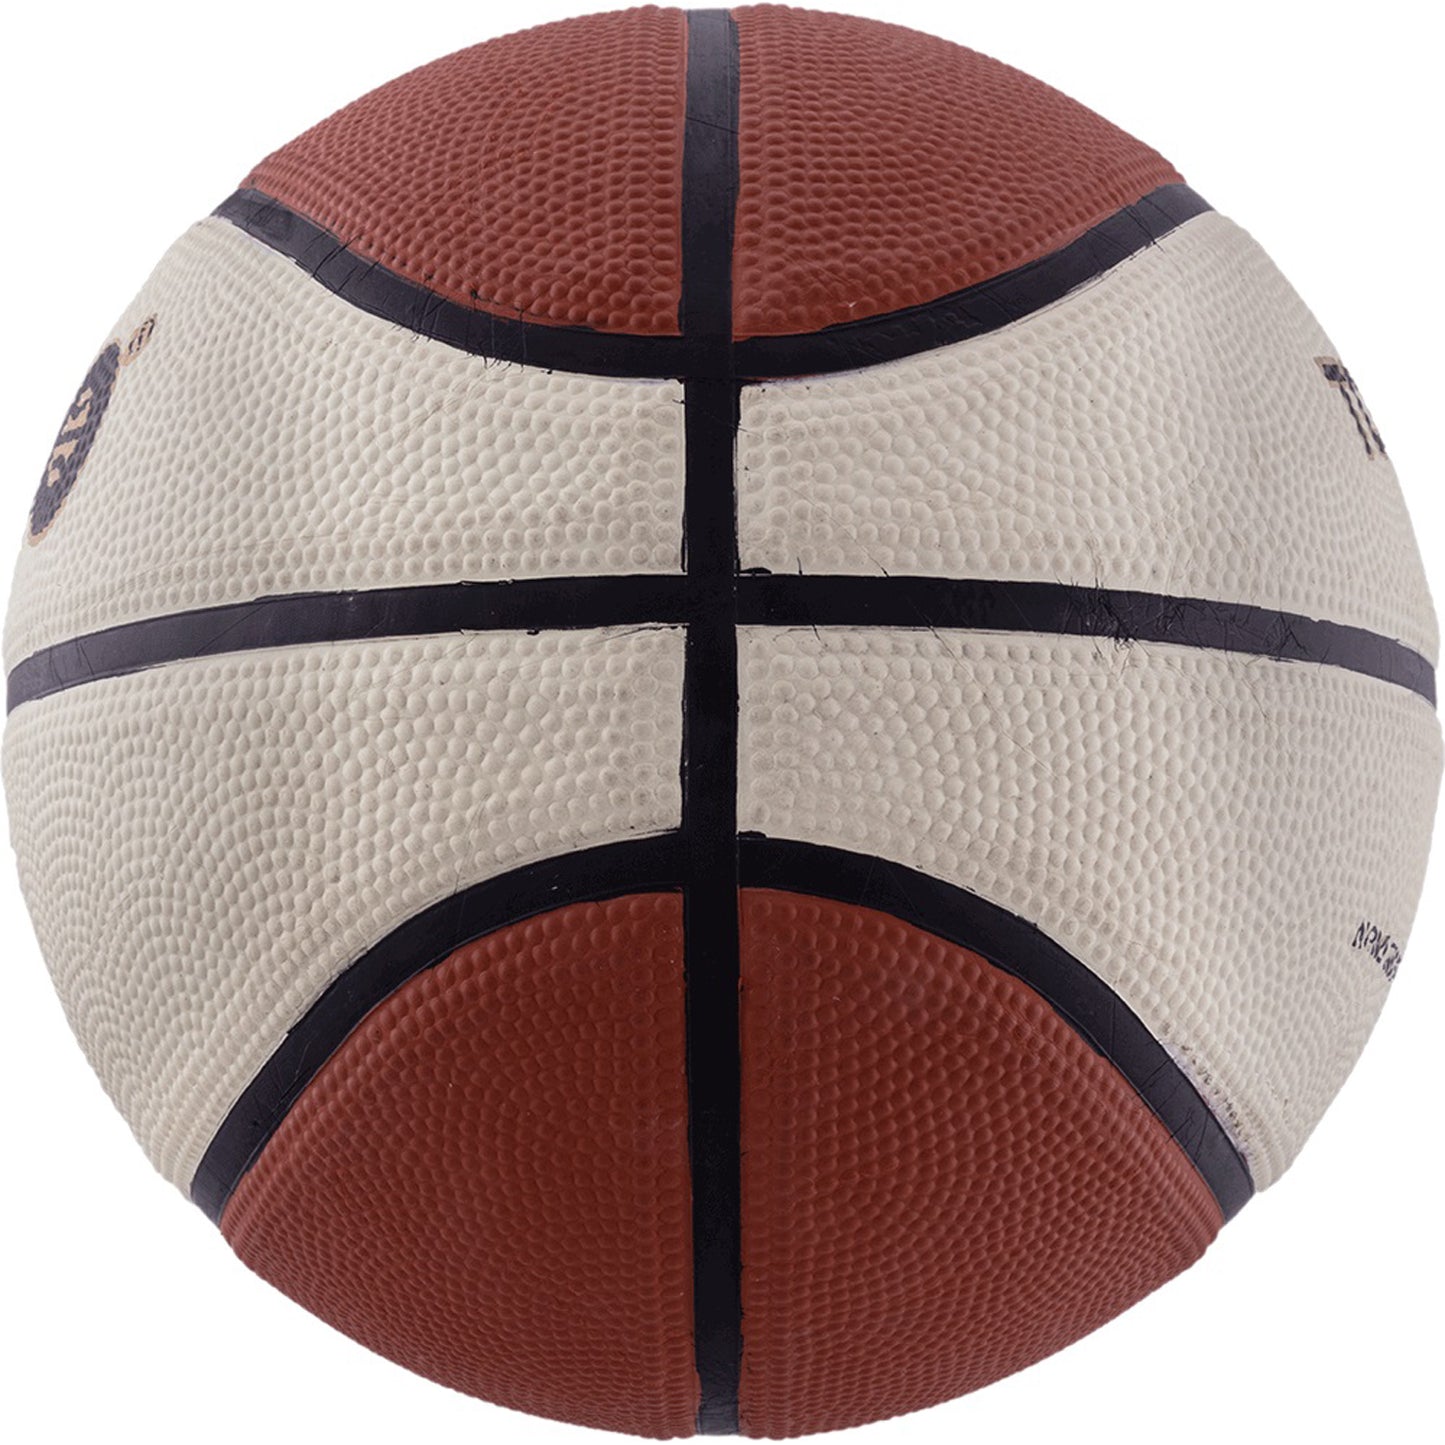 Cosco 13003 Tournament Basket Ball, Size 7 - Best Price online Prokicksports.com